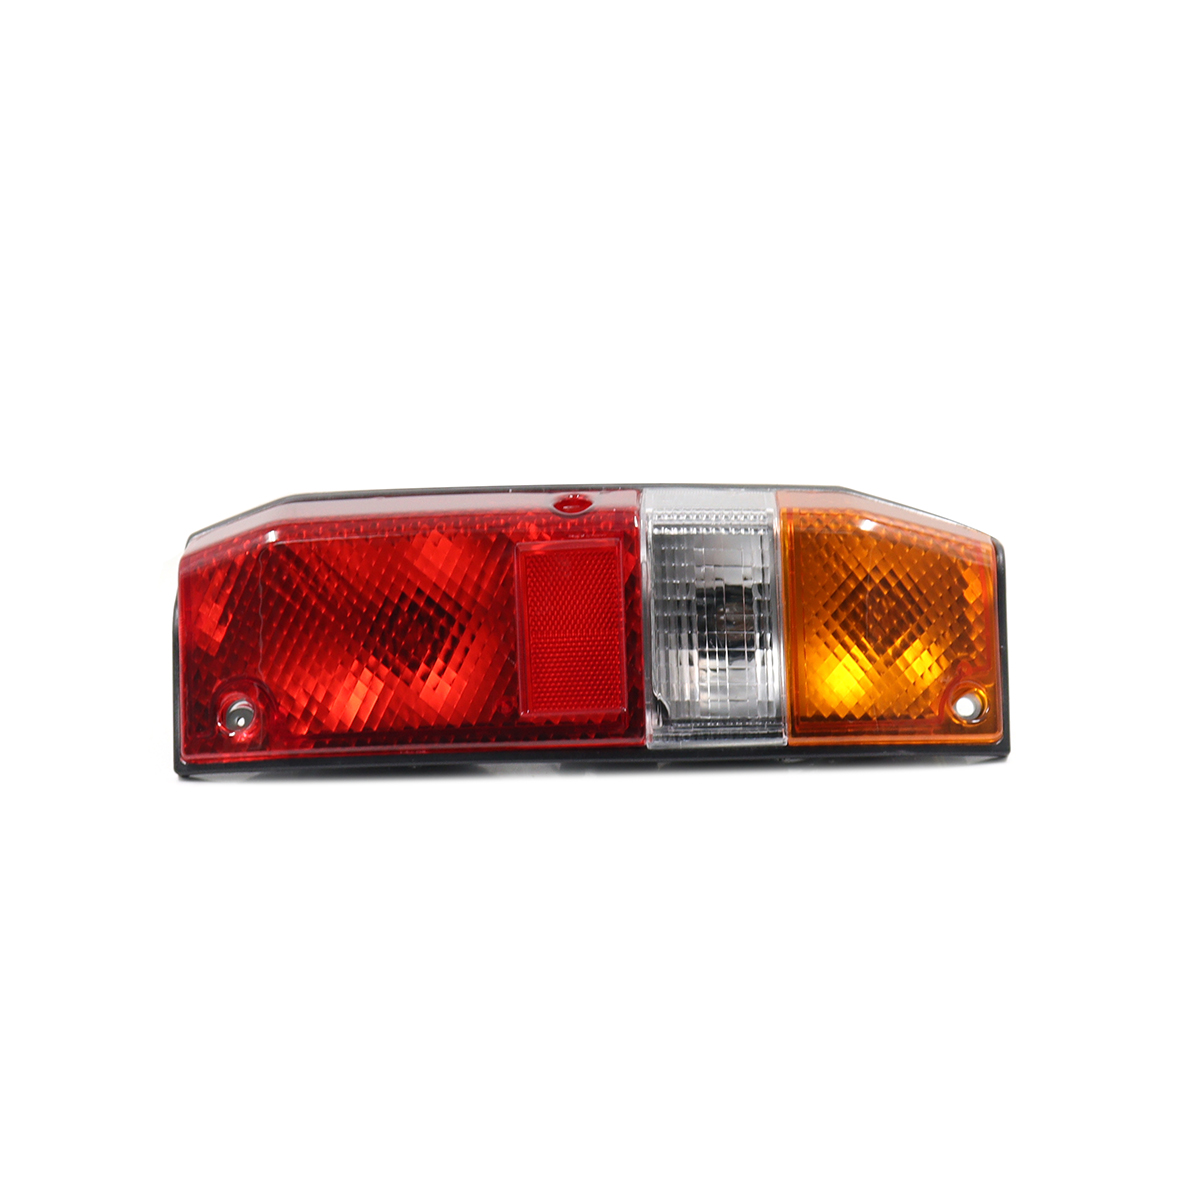 12V Tail Light Rear Lamp Taillight for Toyota Land Cruiser Fj75